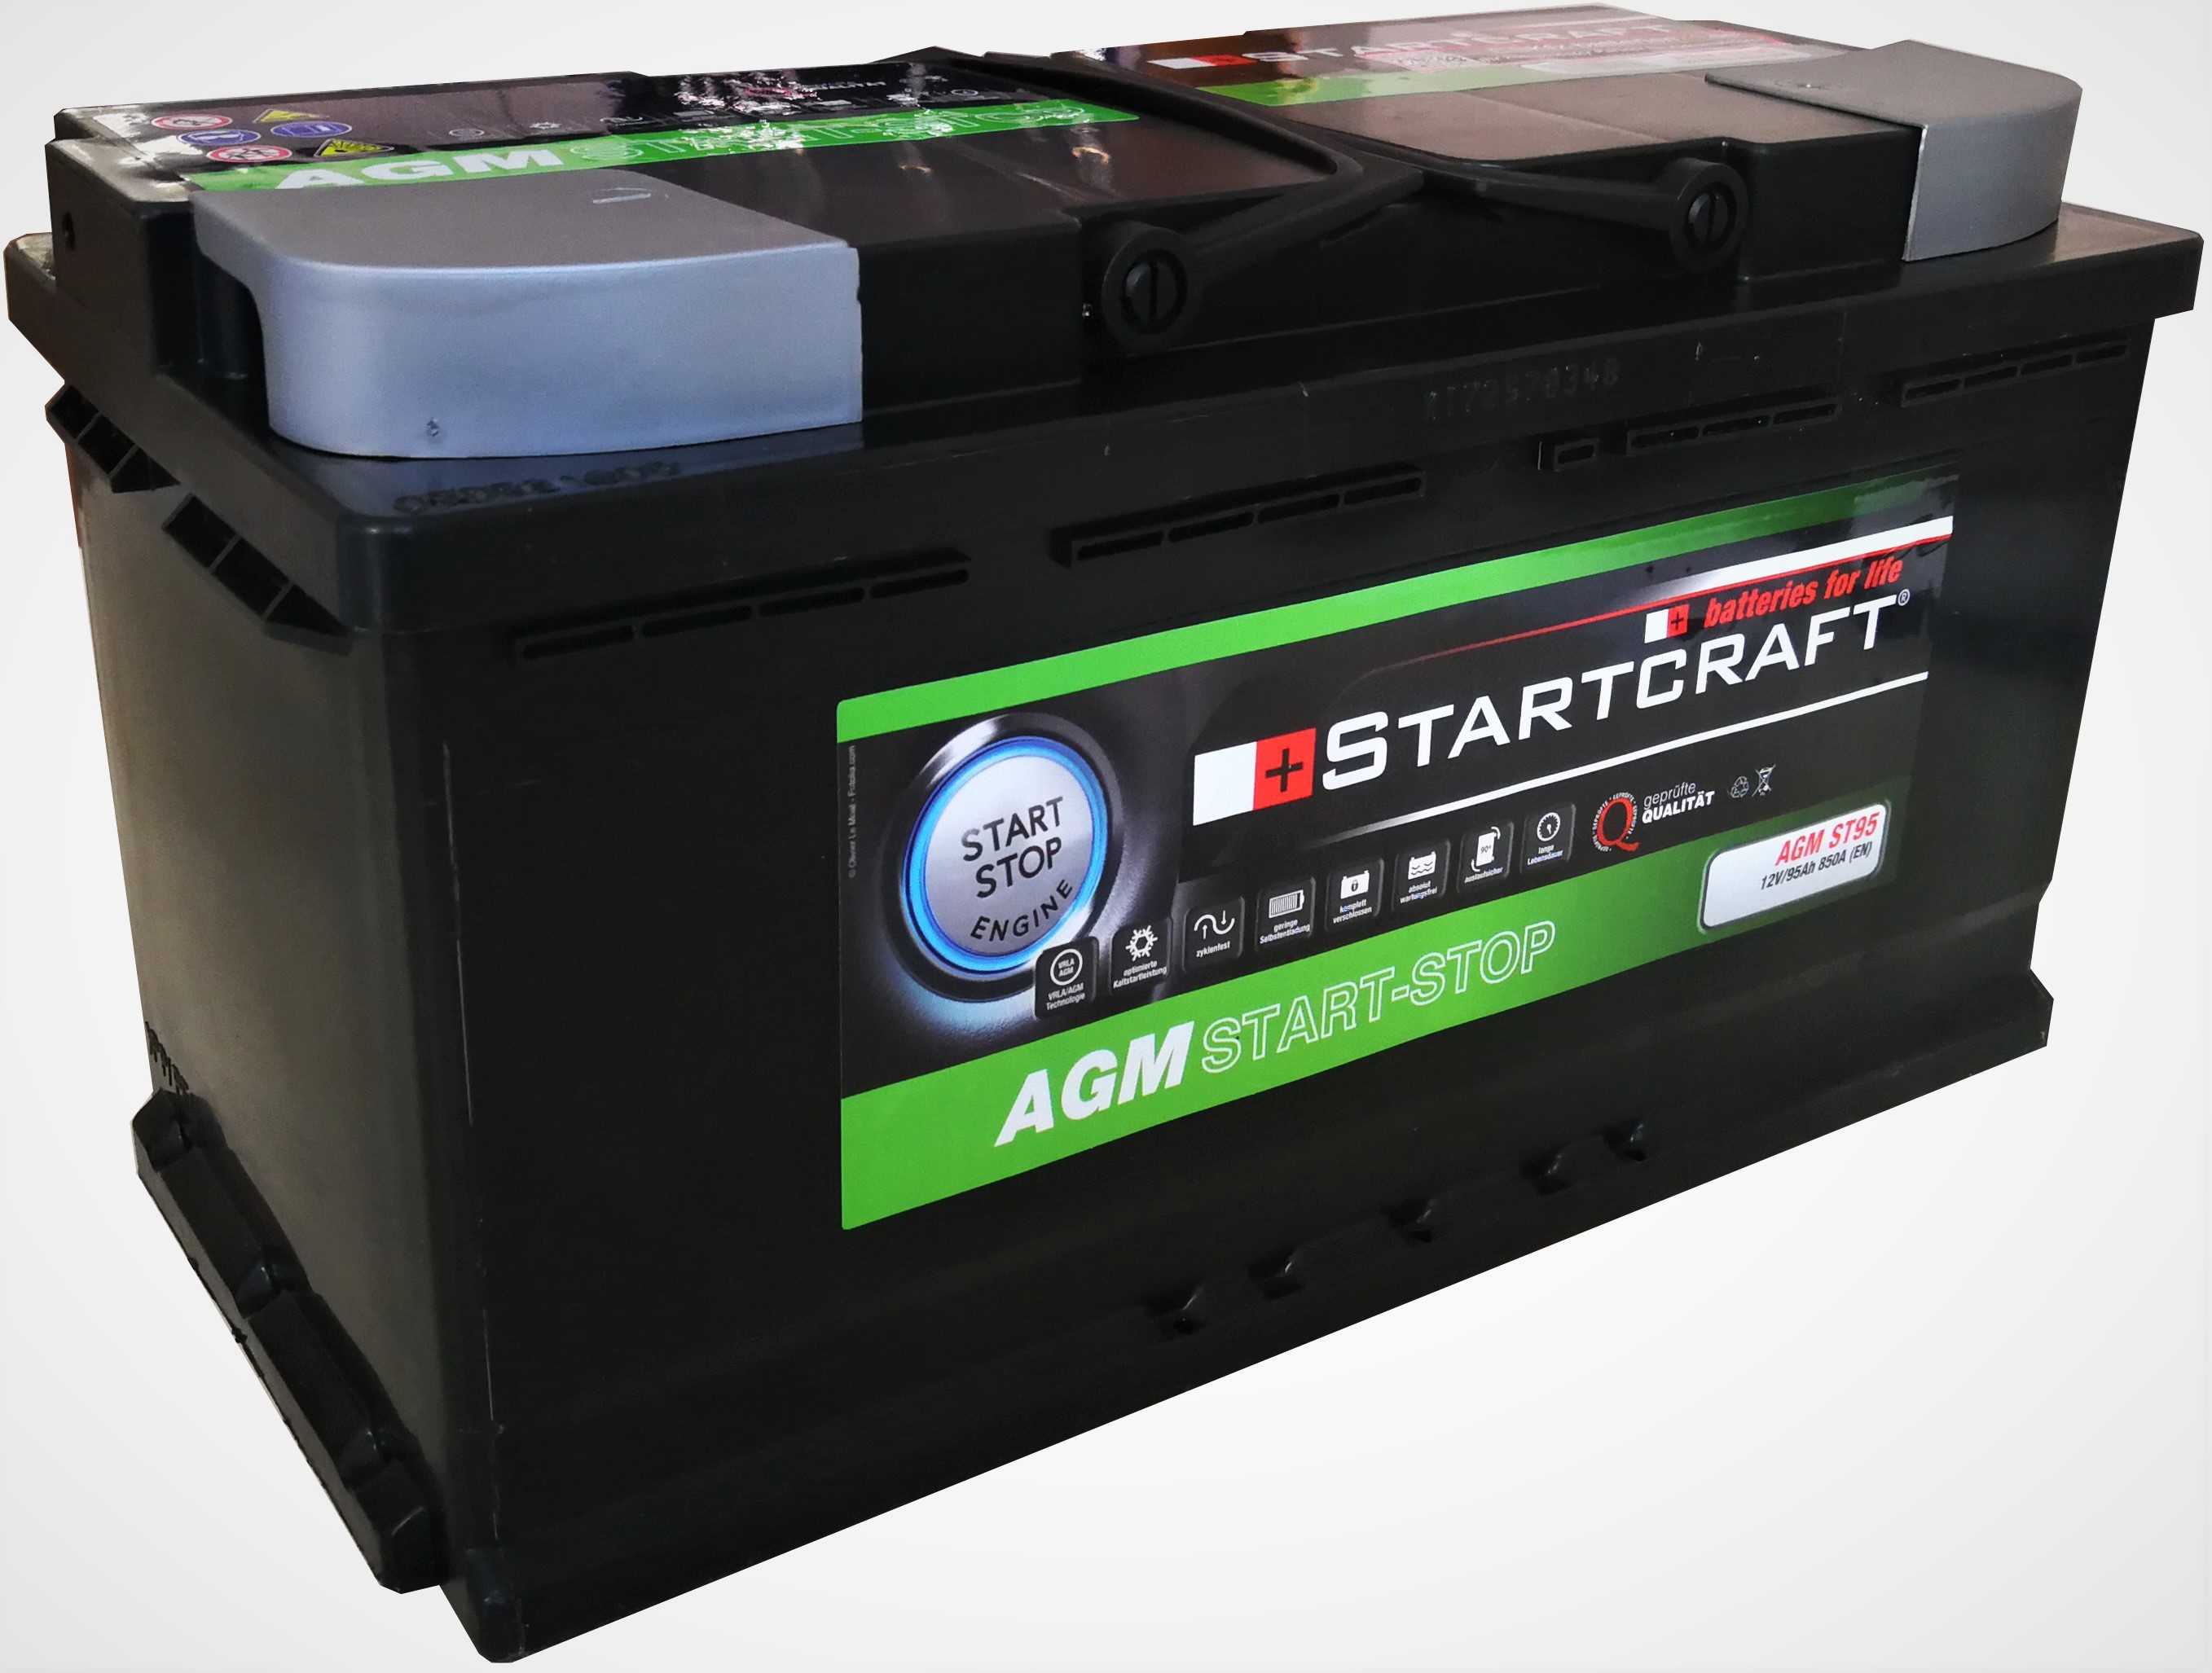 Autobatterie Startcraft AGM Start Stop Vliesbatterie ST95 12V 95Ah